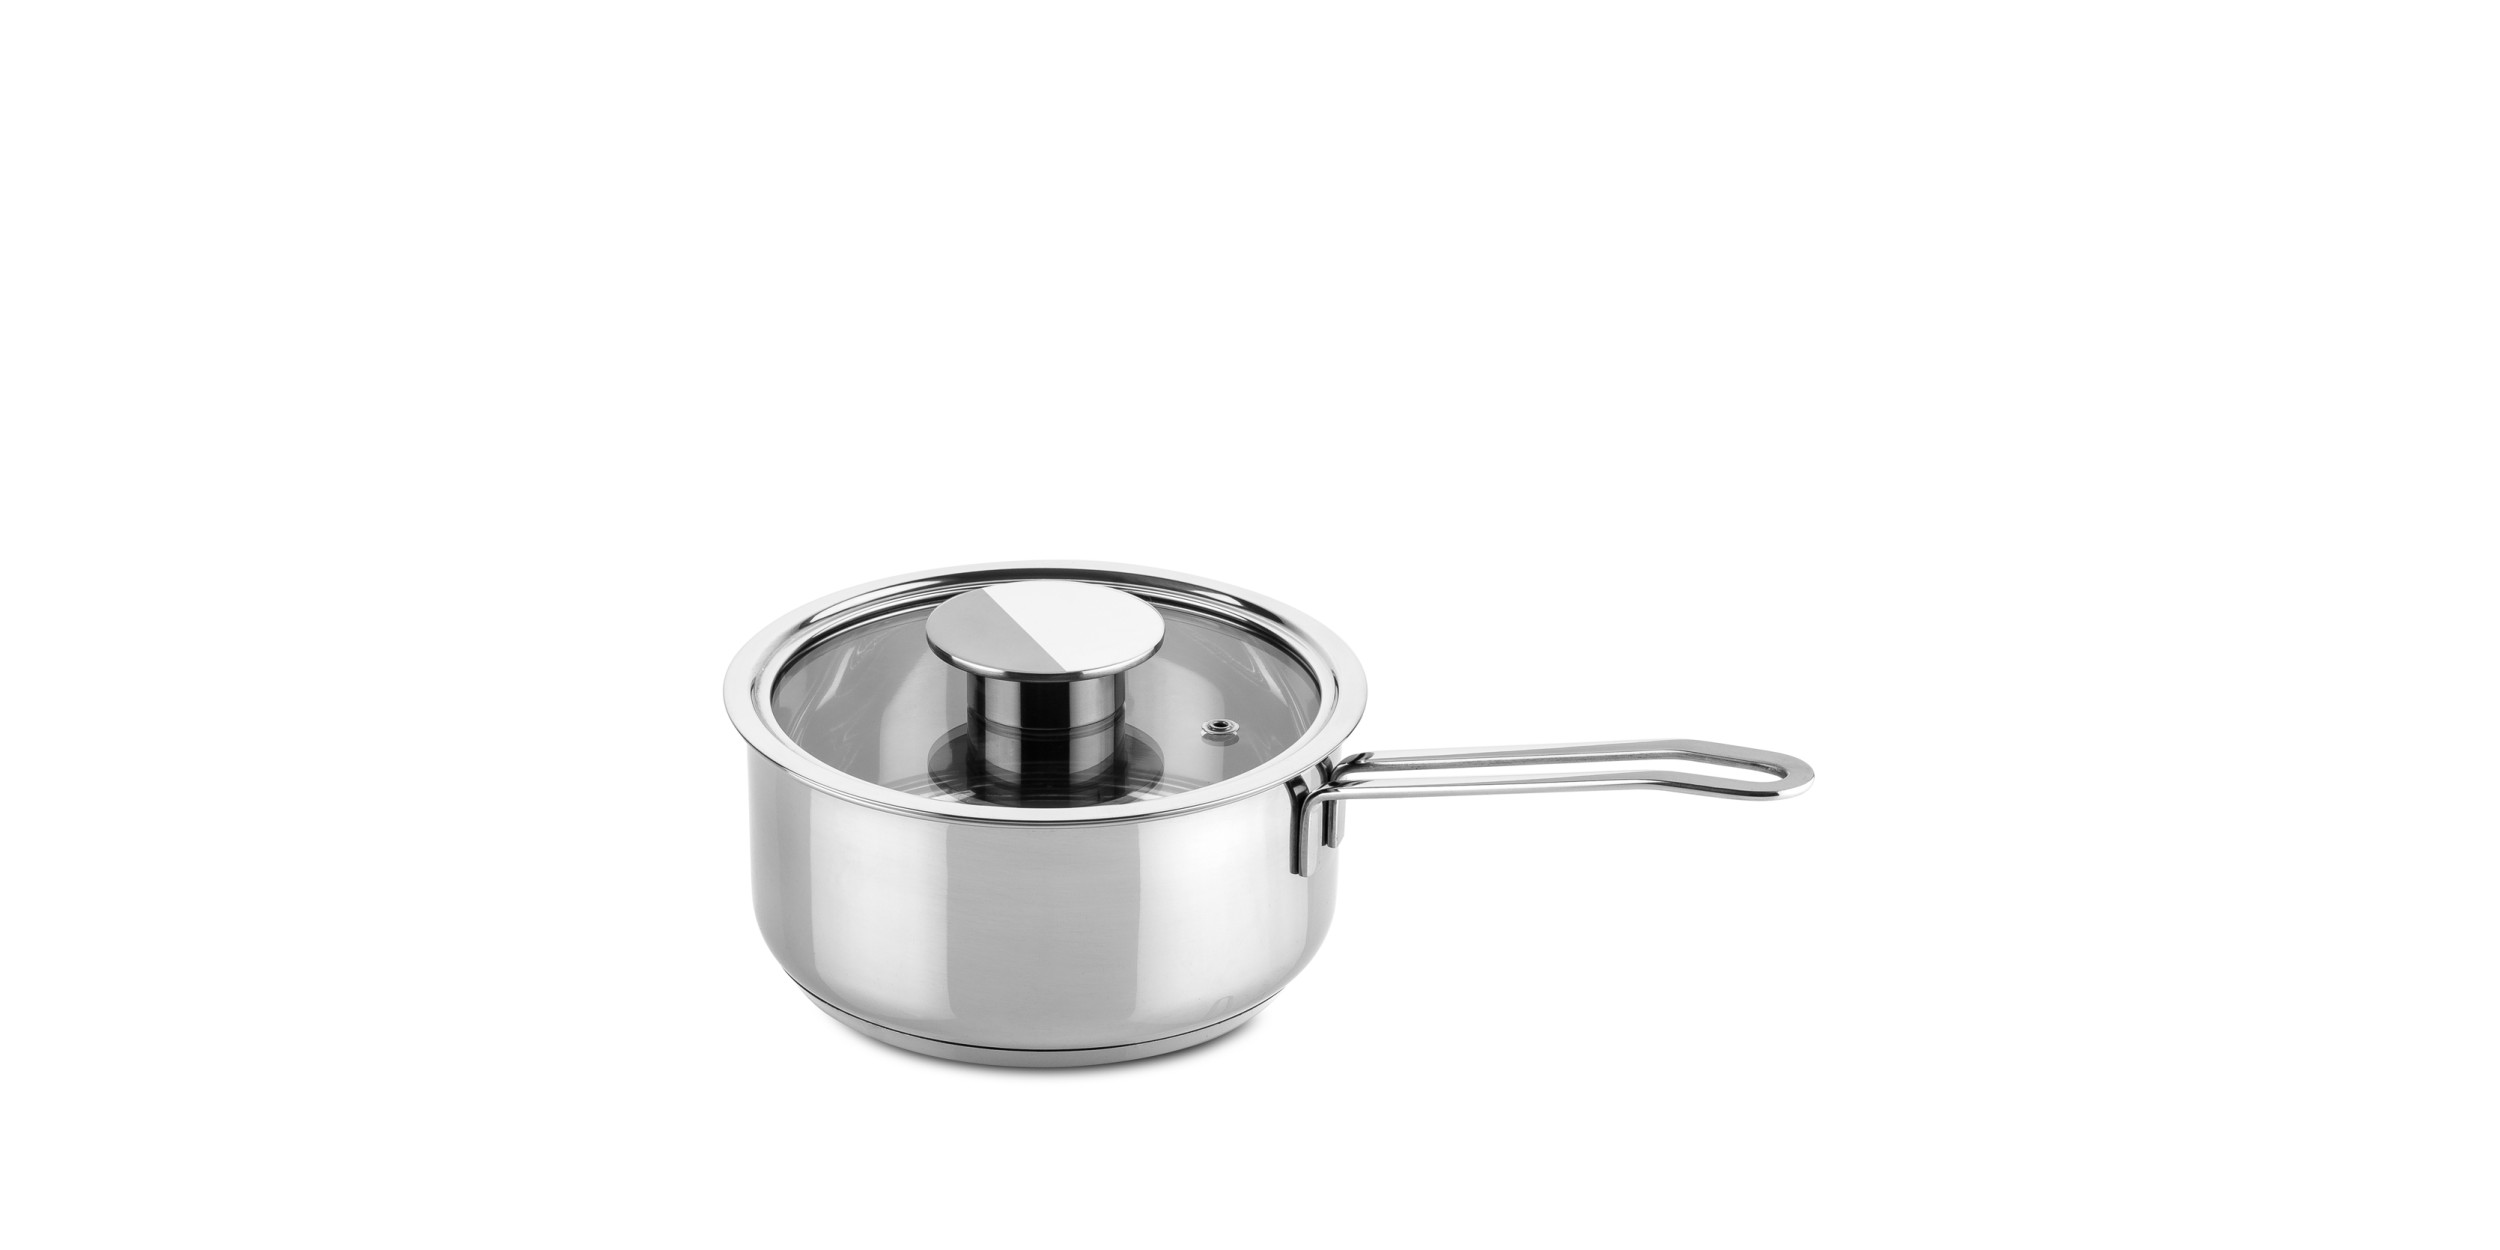 Stainless Steel Casserole Pan